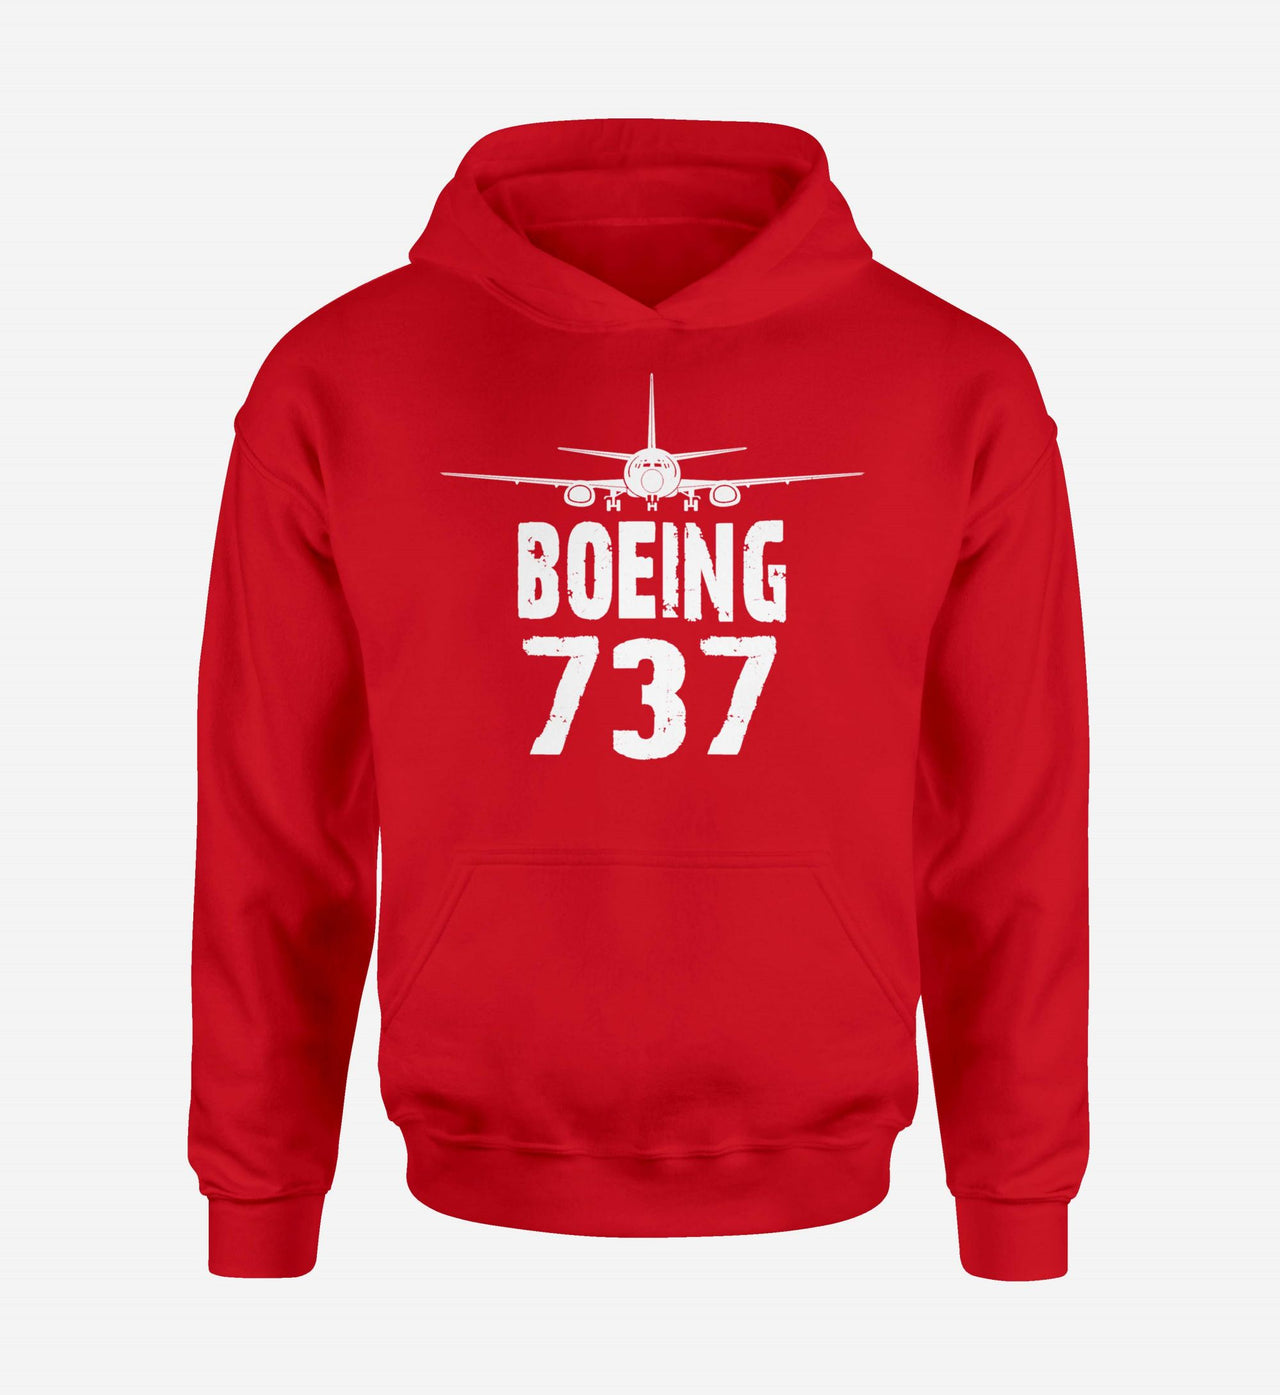 Boeing 737 & Plane Designed Hoodies